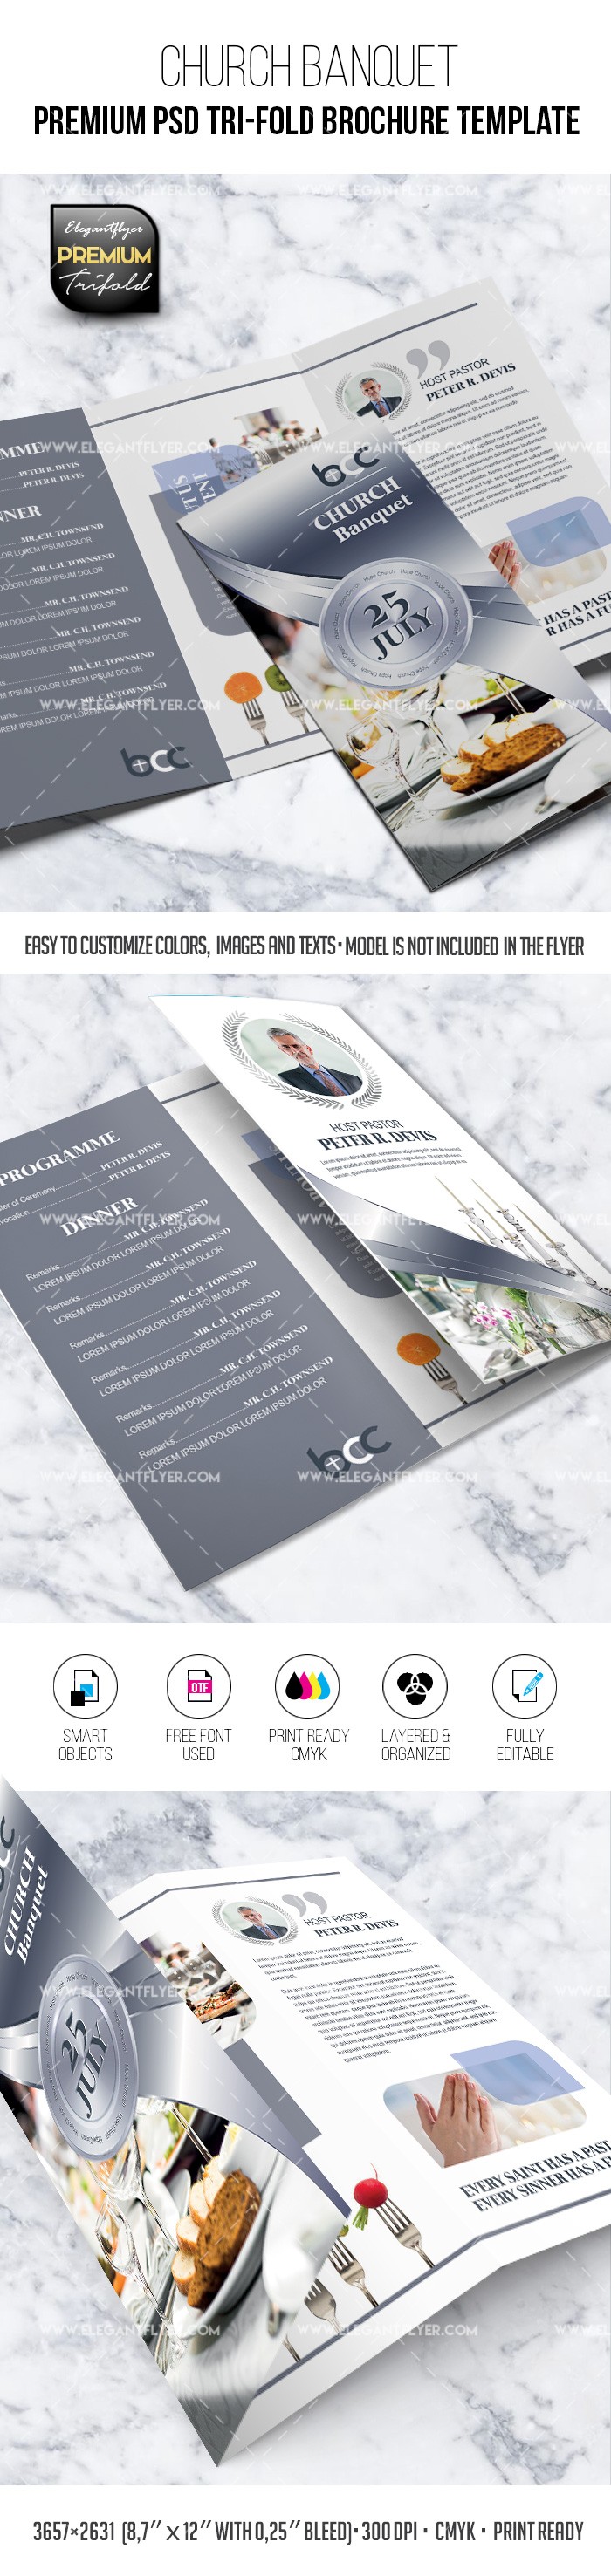 Church Banquet – Premium PSD Tri-Fold Brochure Template by ElegantFlyer